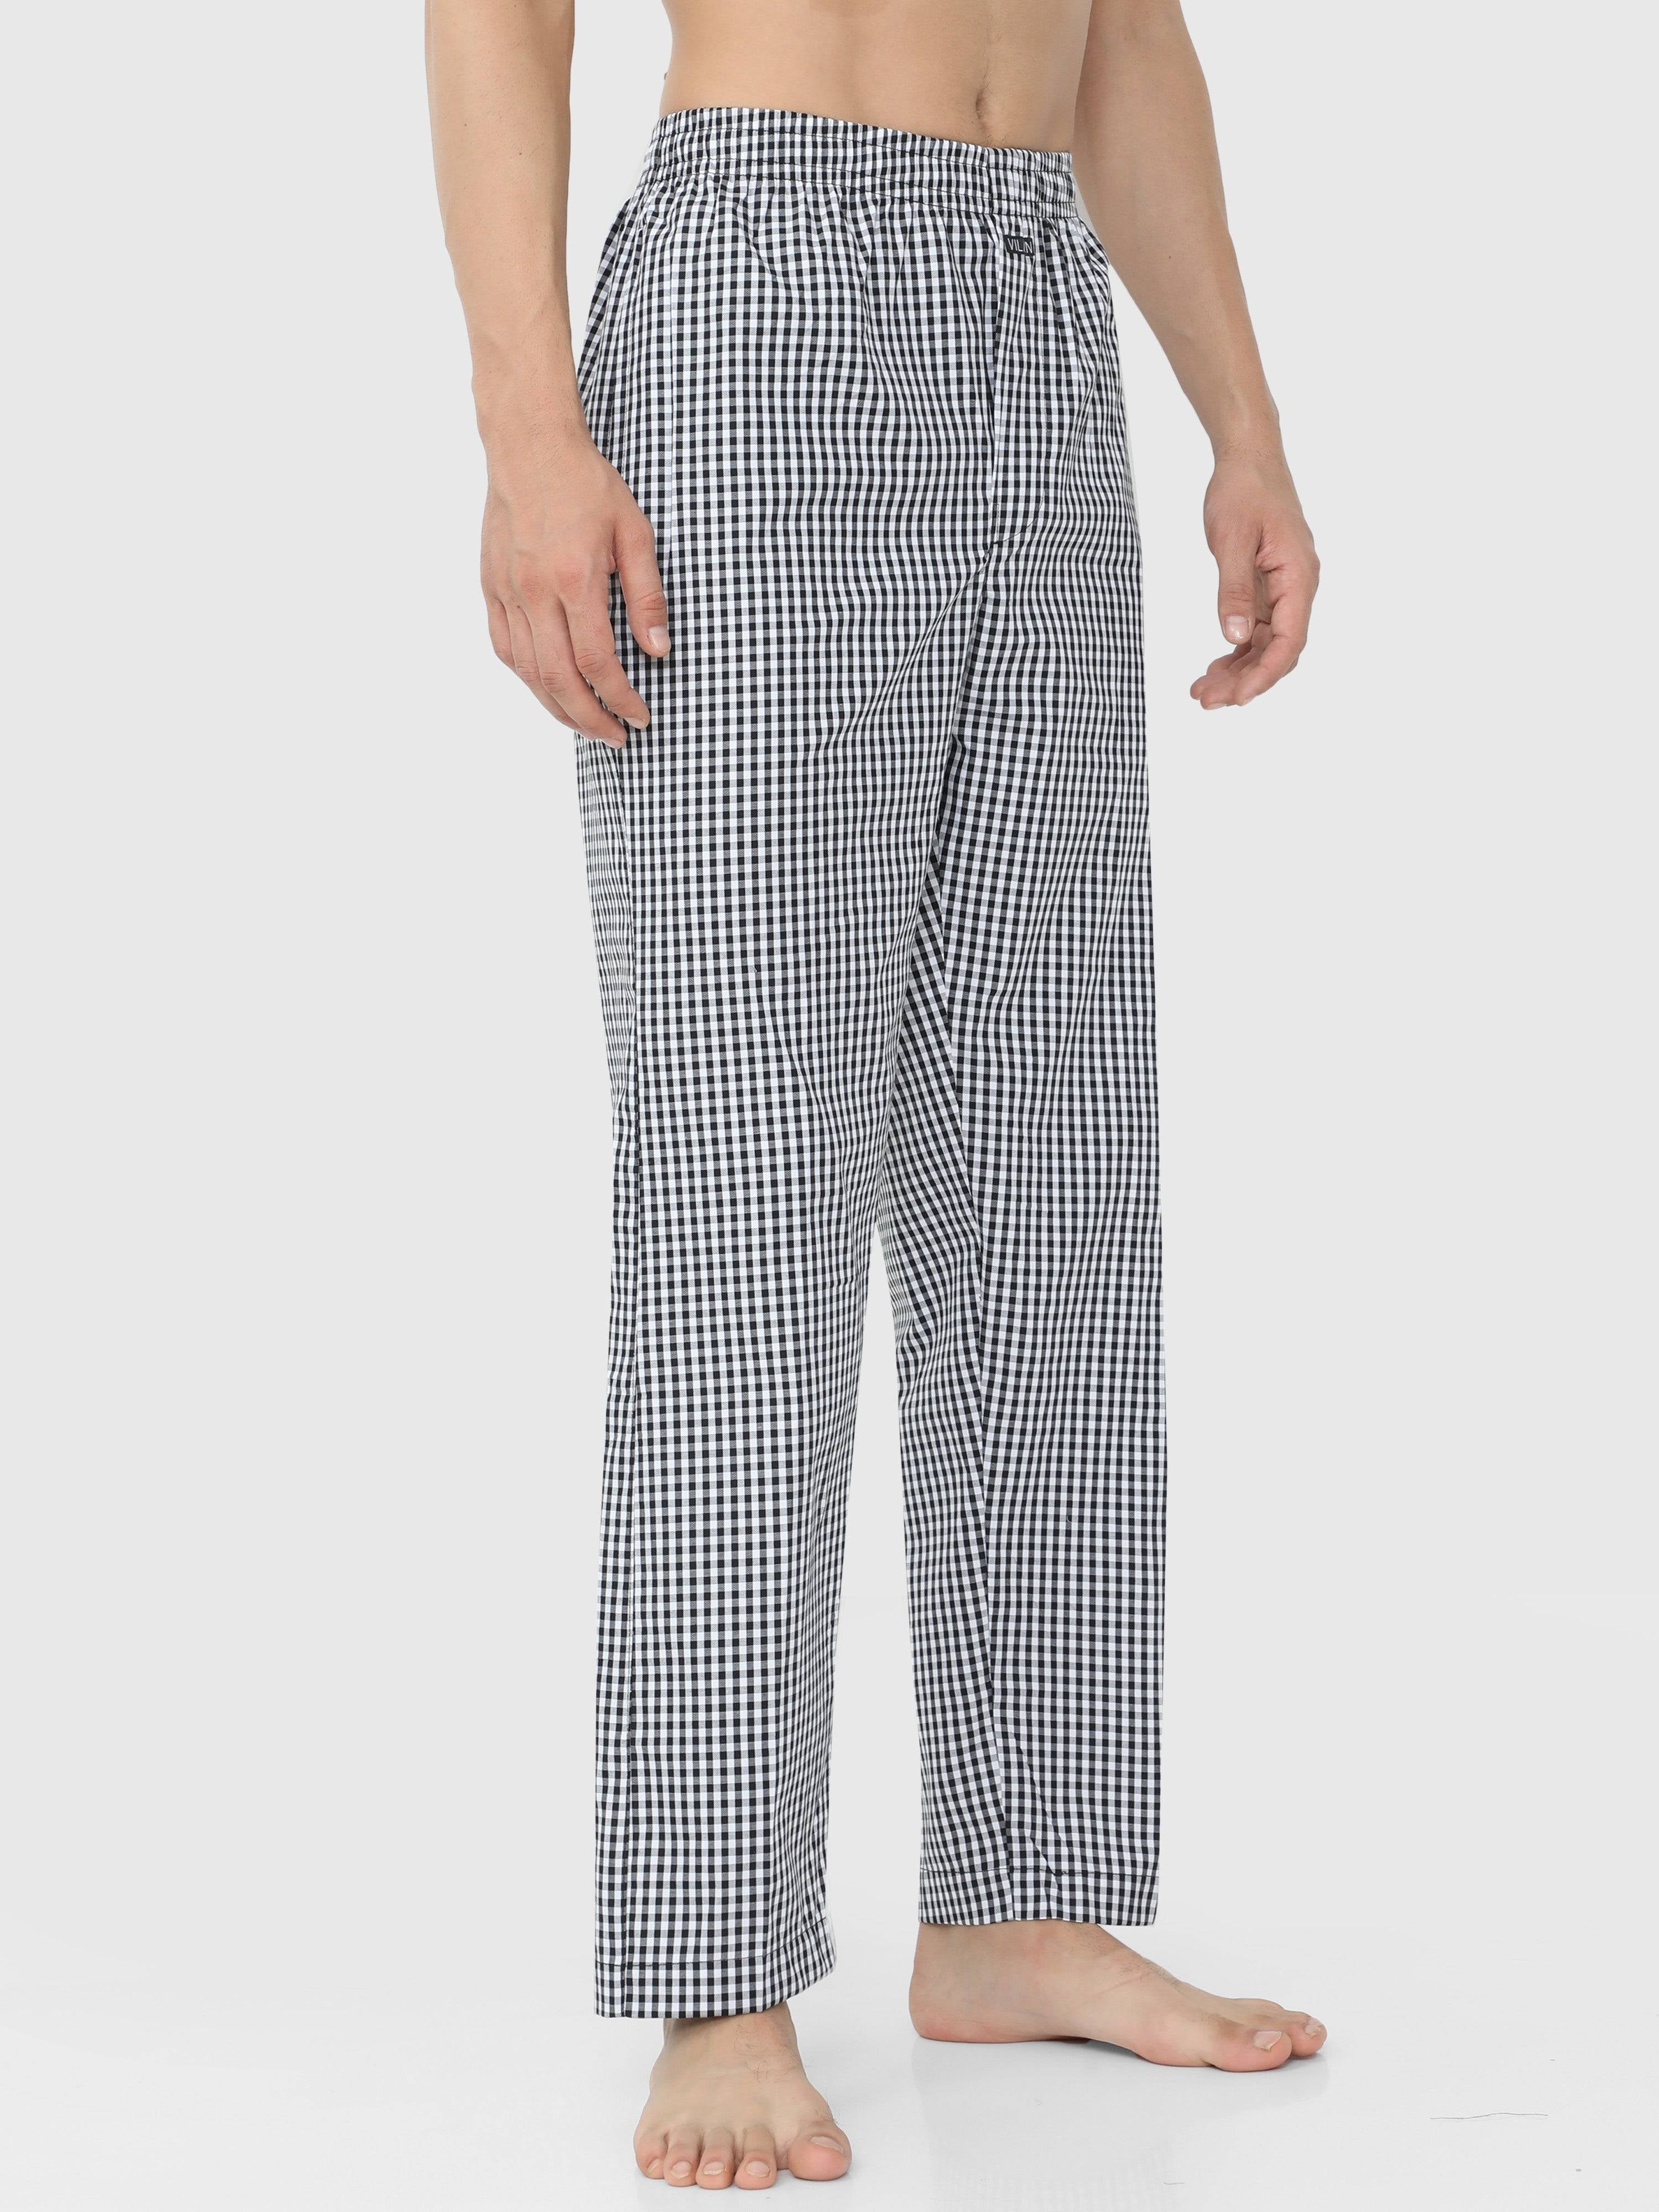 Black Orange Checked Premium Cotton Lounge Pant Pajama Online In India  Color Black SizeShirt M